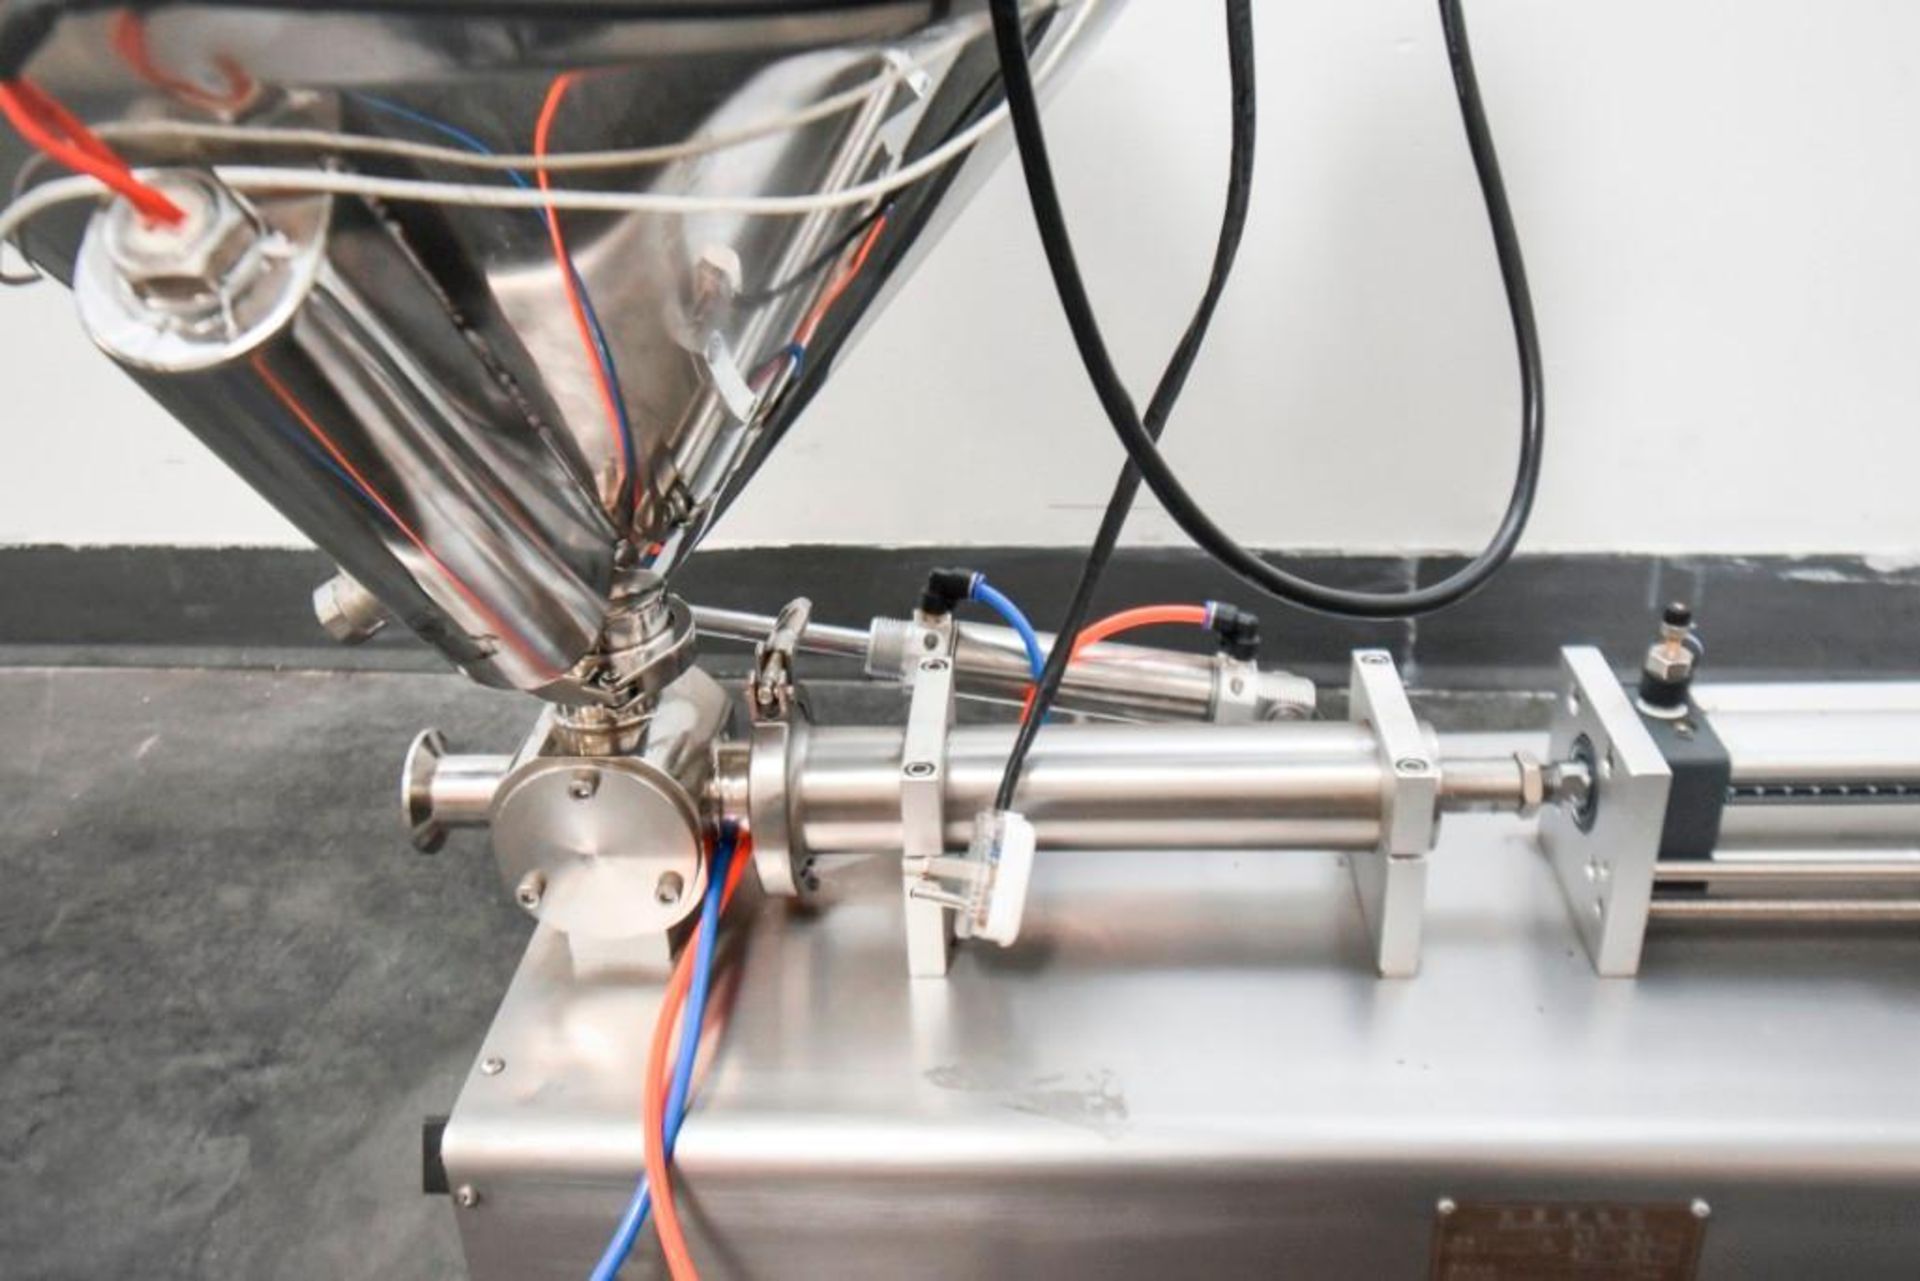 Quantitative Semi-Automatic Paste Liquid Filling Machine G1WG with Heated Hopper & Mixing Motor - Image 6 of 15